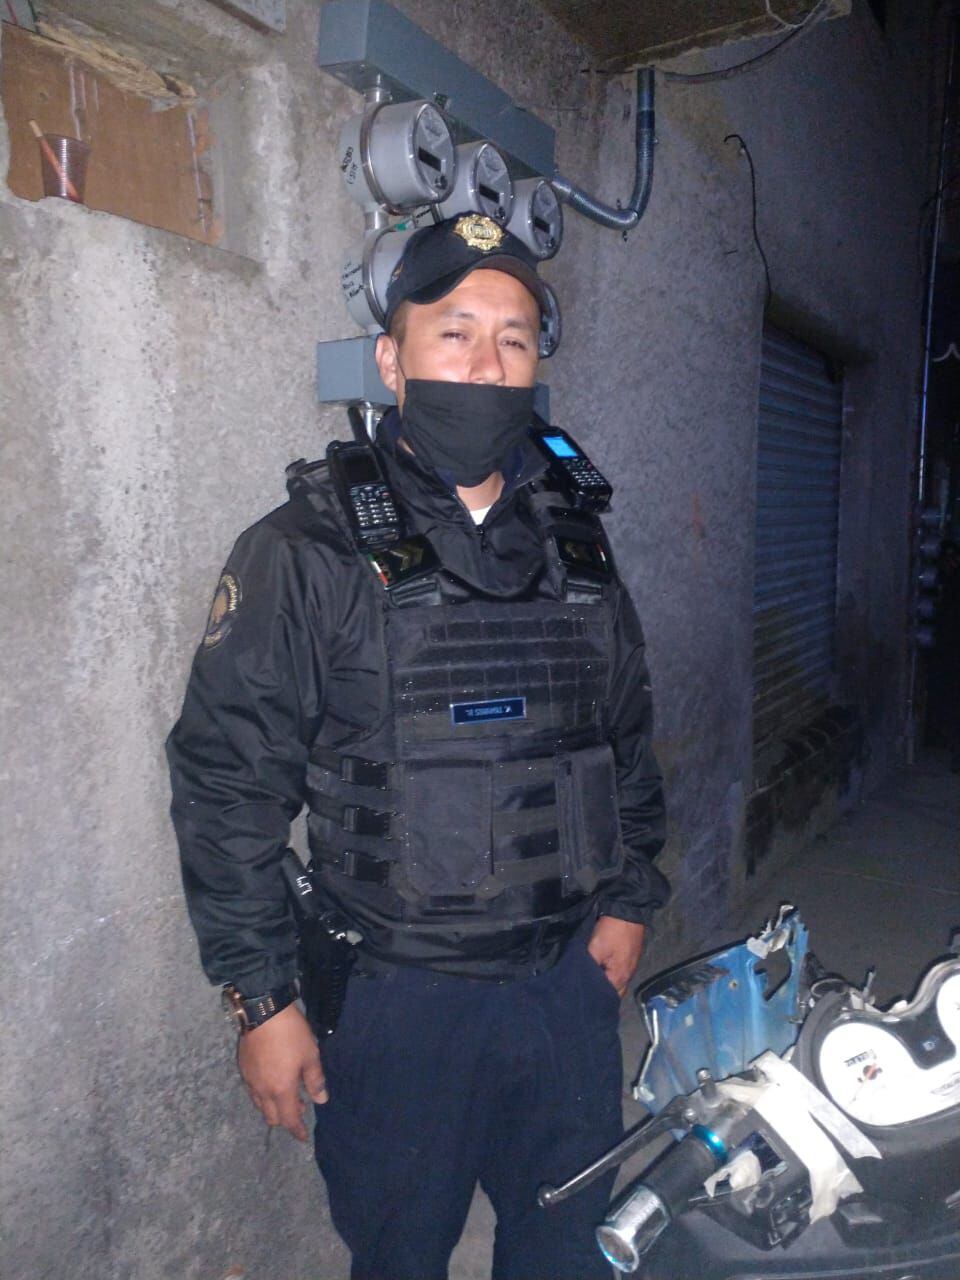 Luis muerte policías CdMx (Foto: Antonio San Juan/Infoabe)